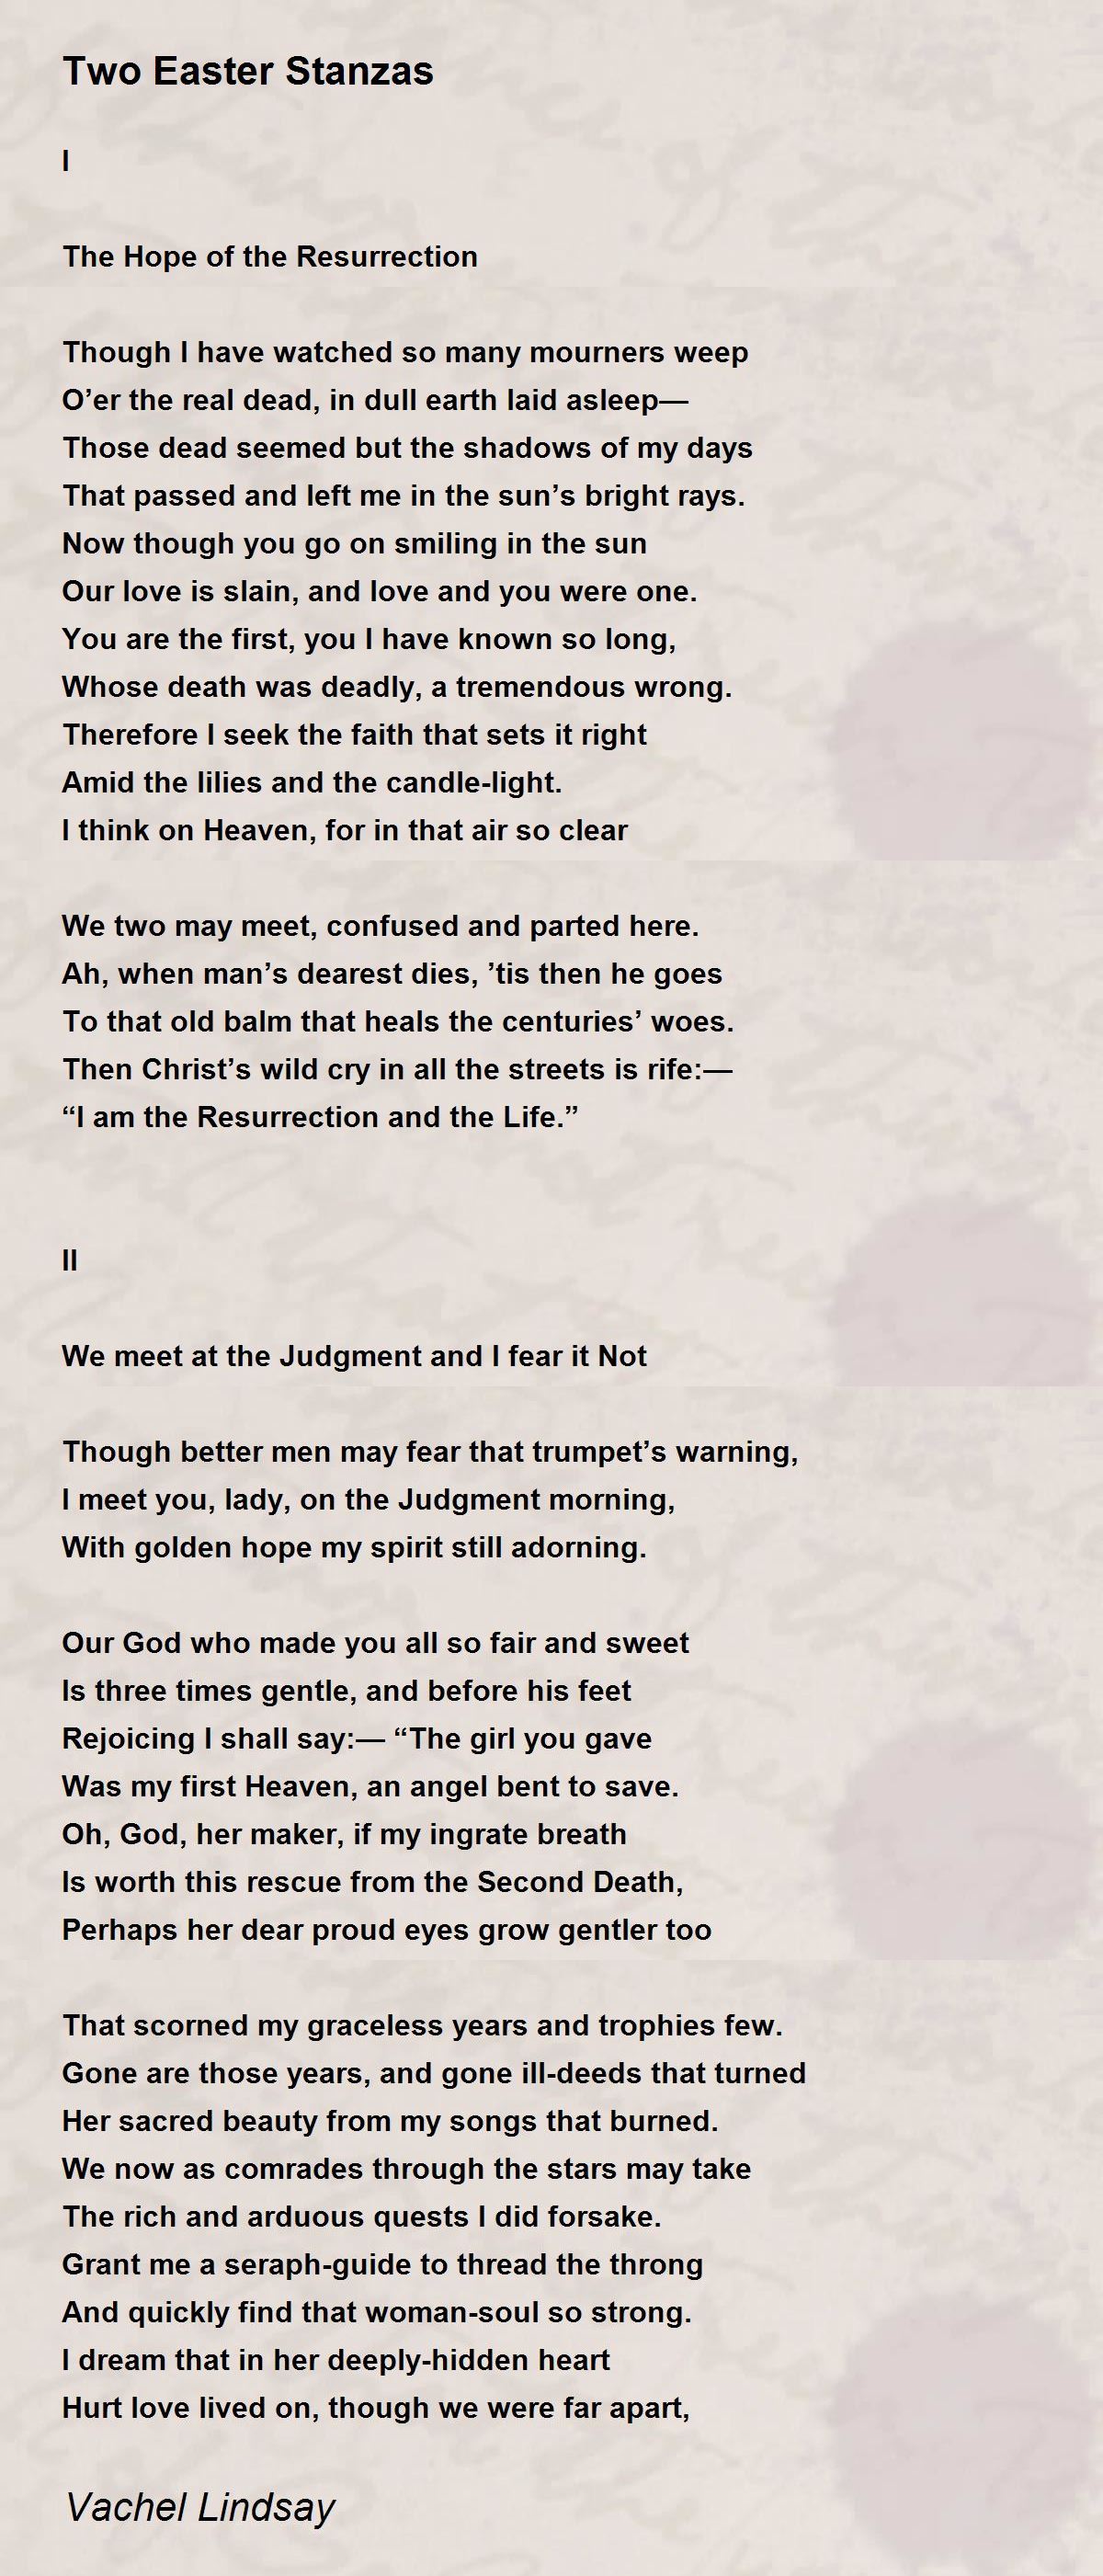 Two Easter Stanzas Poem by Vachel Lindsay - Poem Hunter